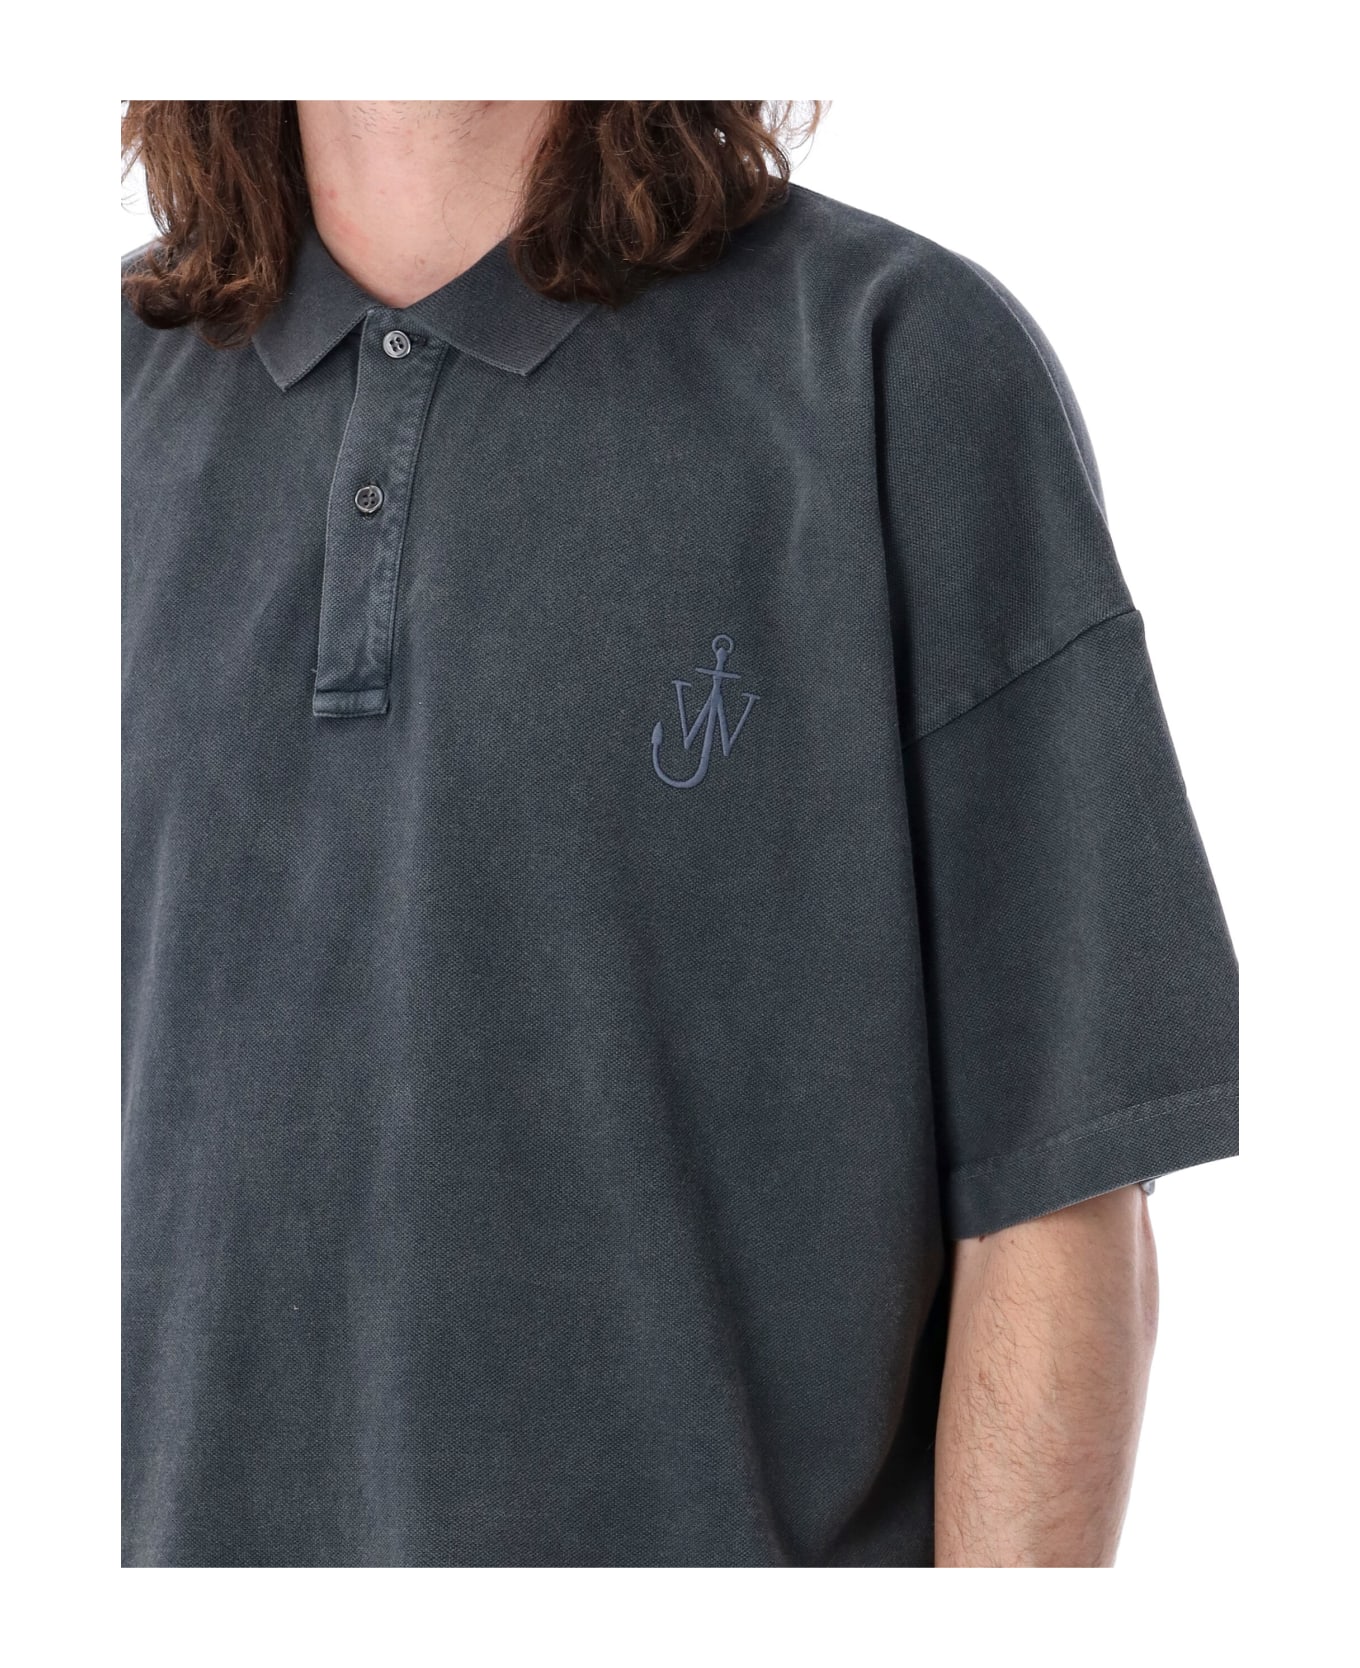 J.W. Anderson Logo Polo Shirt - CHARCOAL